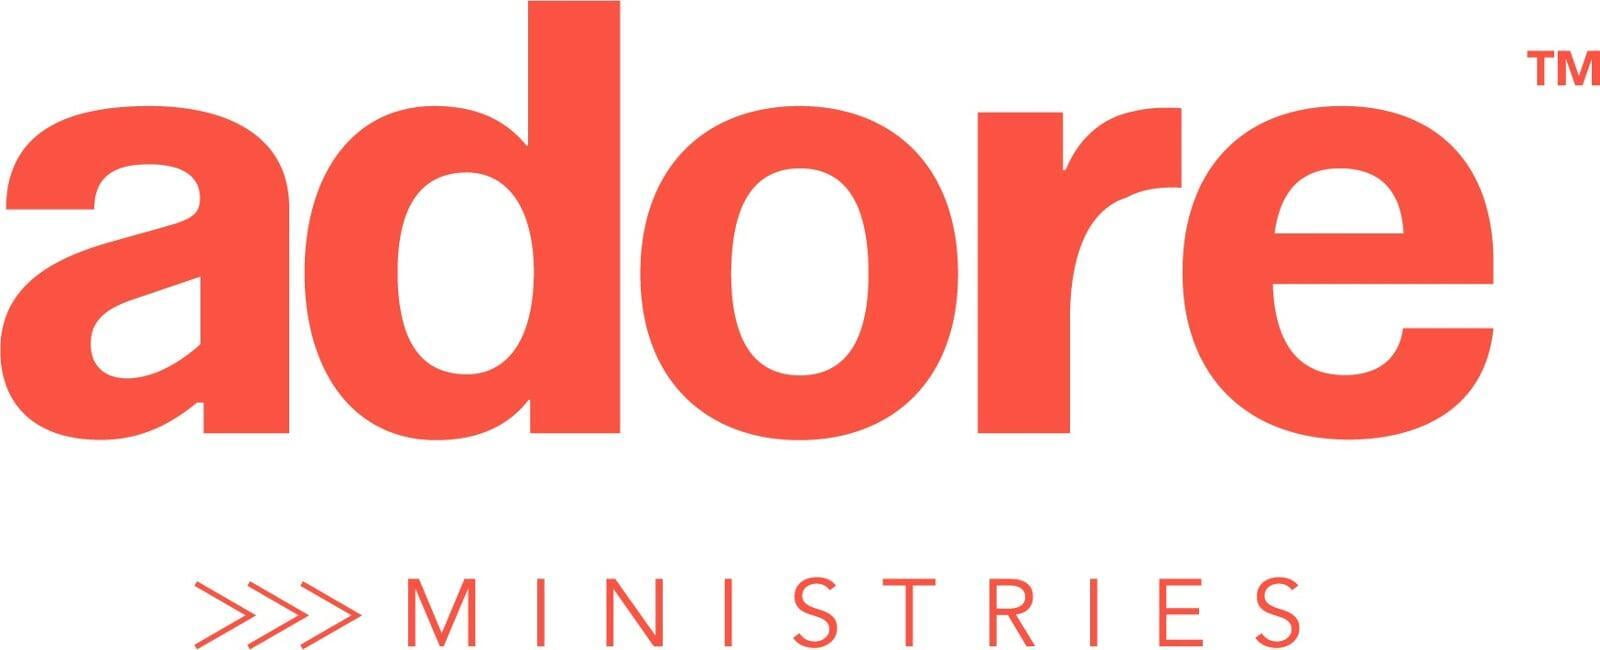 Adore Ministries